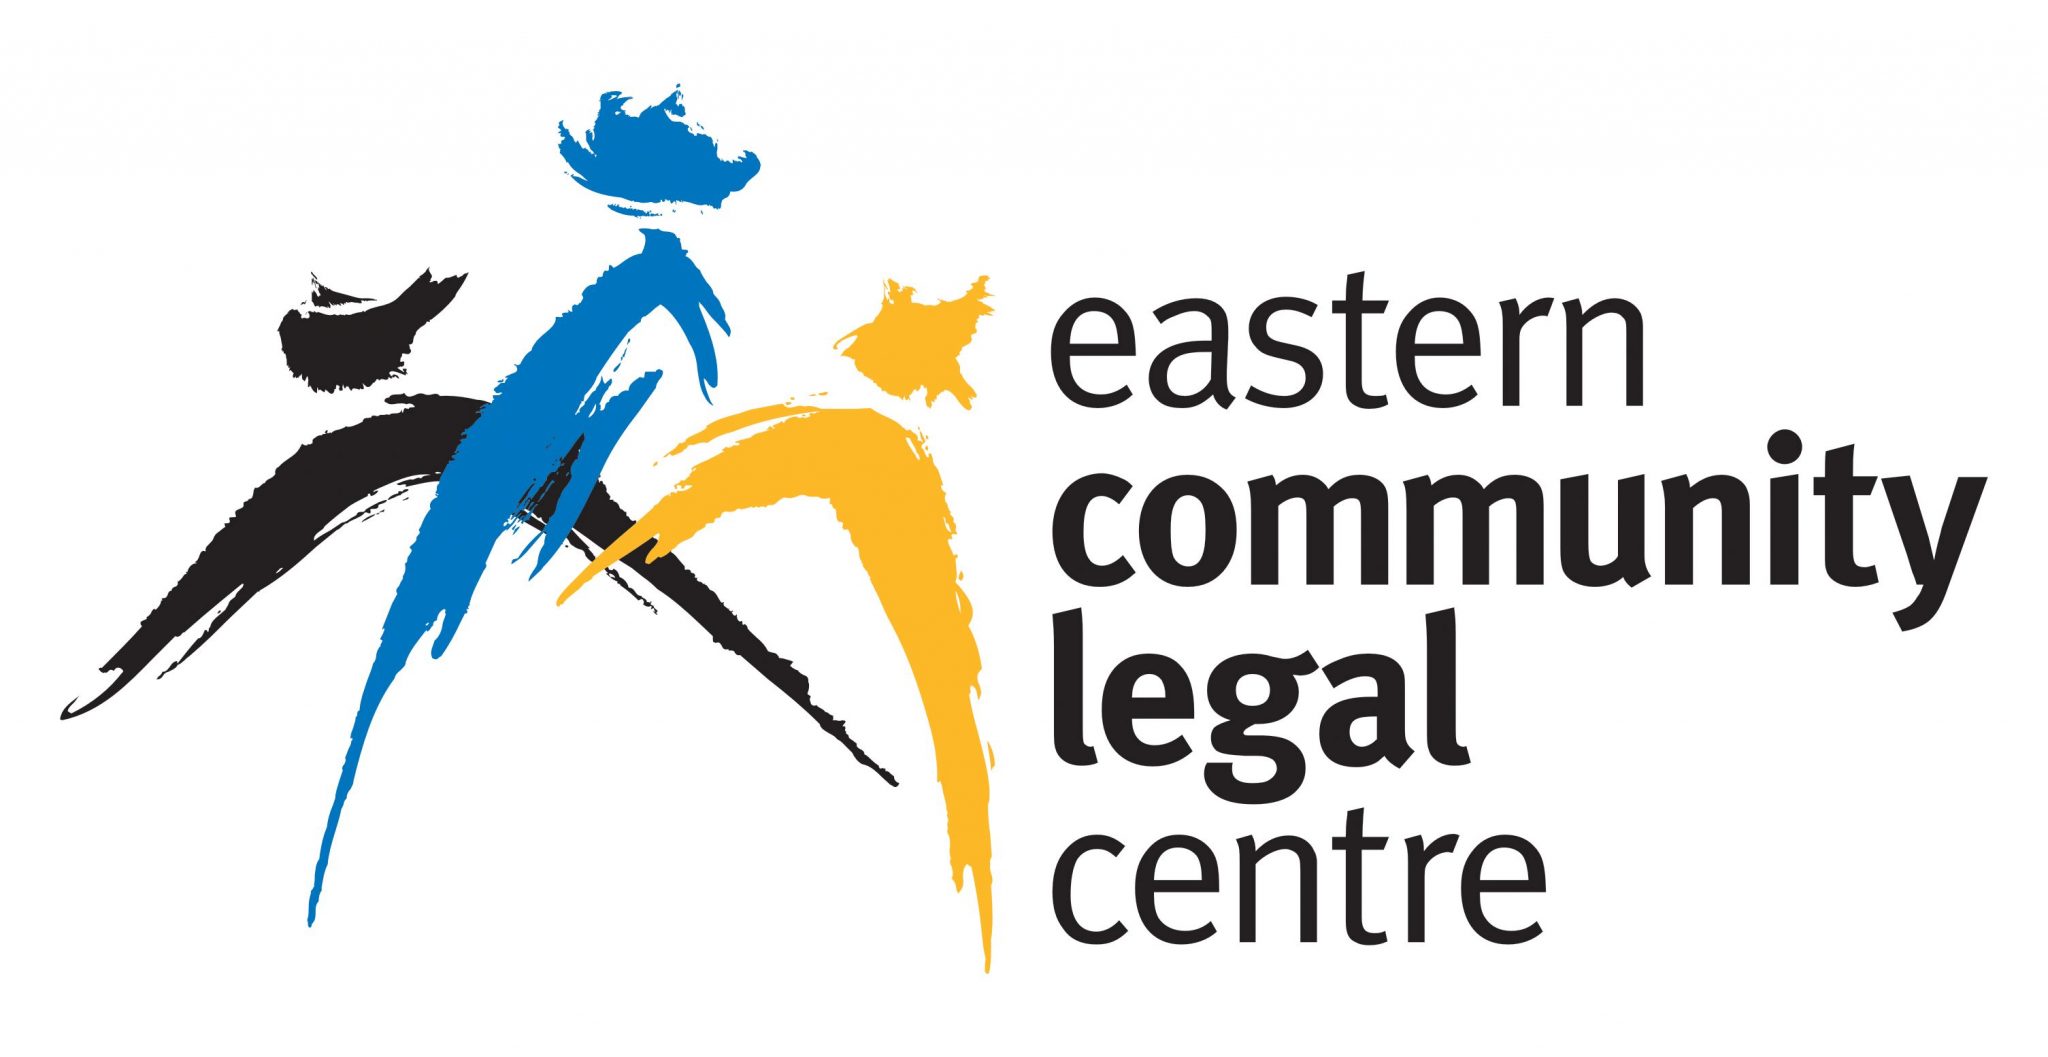 Community legal centre jobs queensland